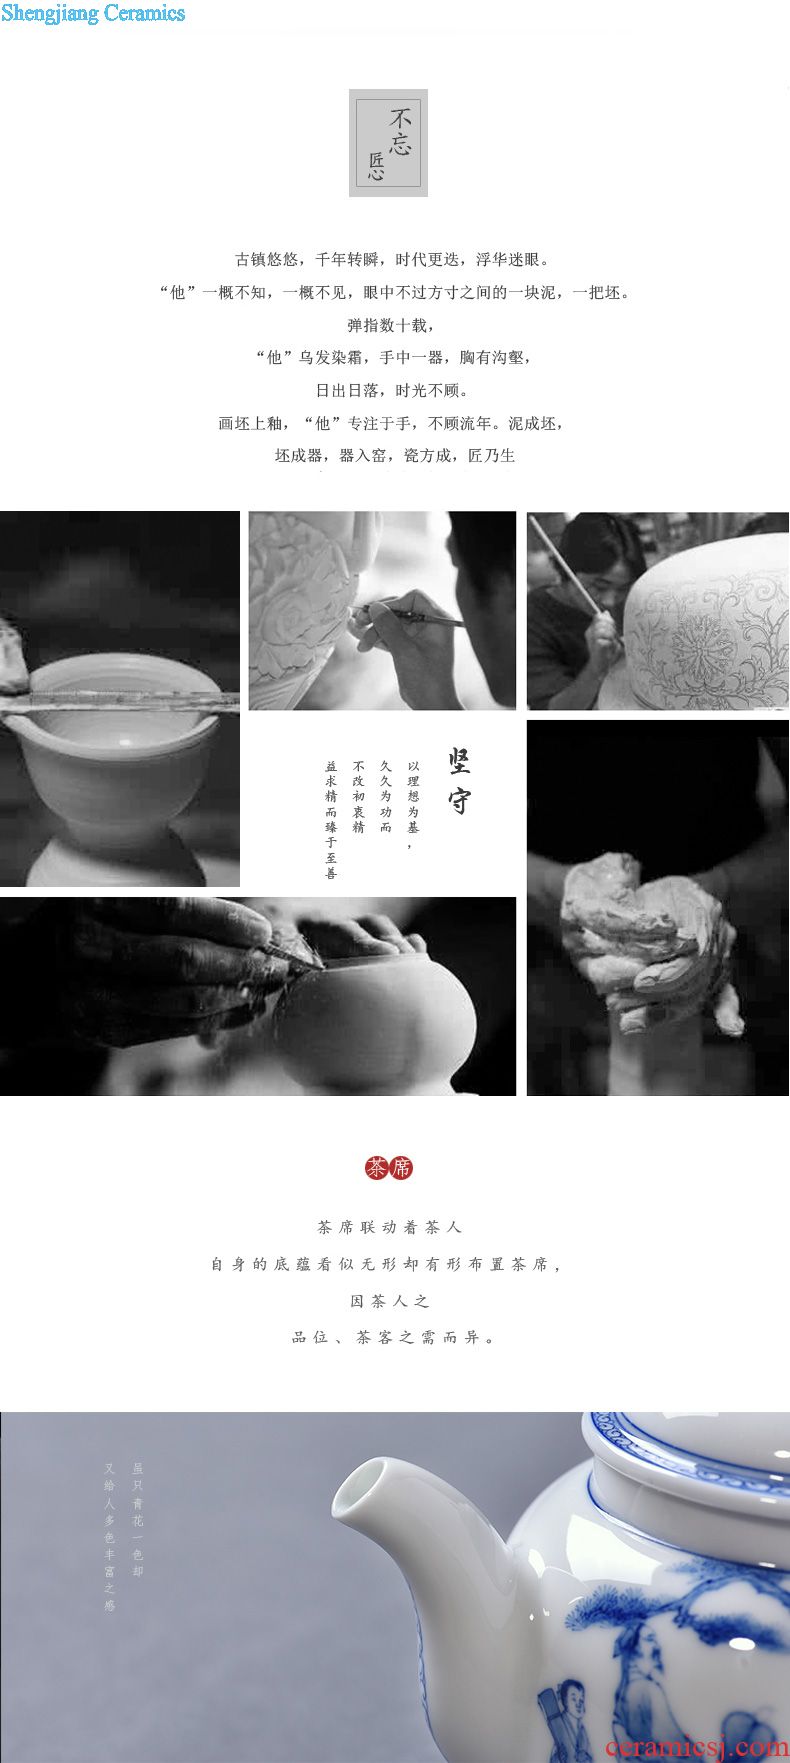 JingJun Jingdezhen hand-painted ceramic teapot kung fu tea set single pot of tea filter colored enamel pot of the teapot